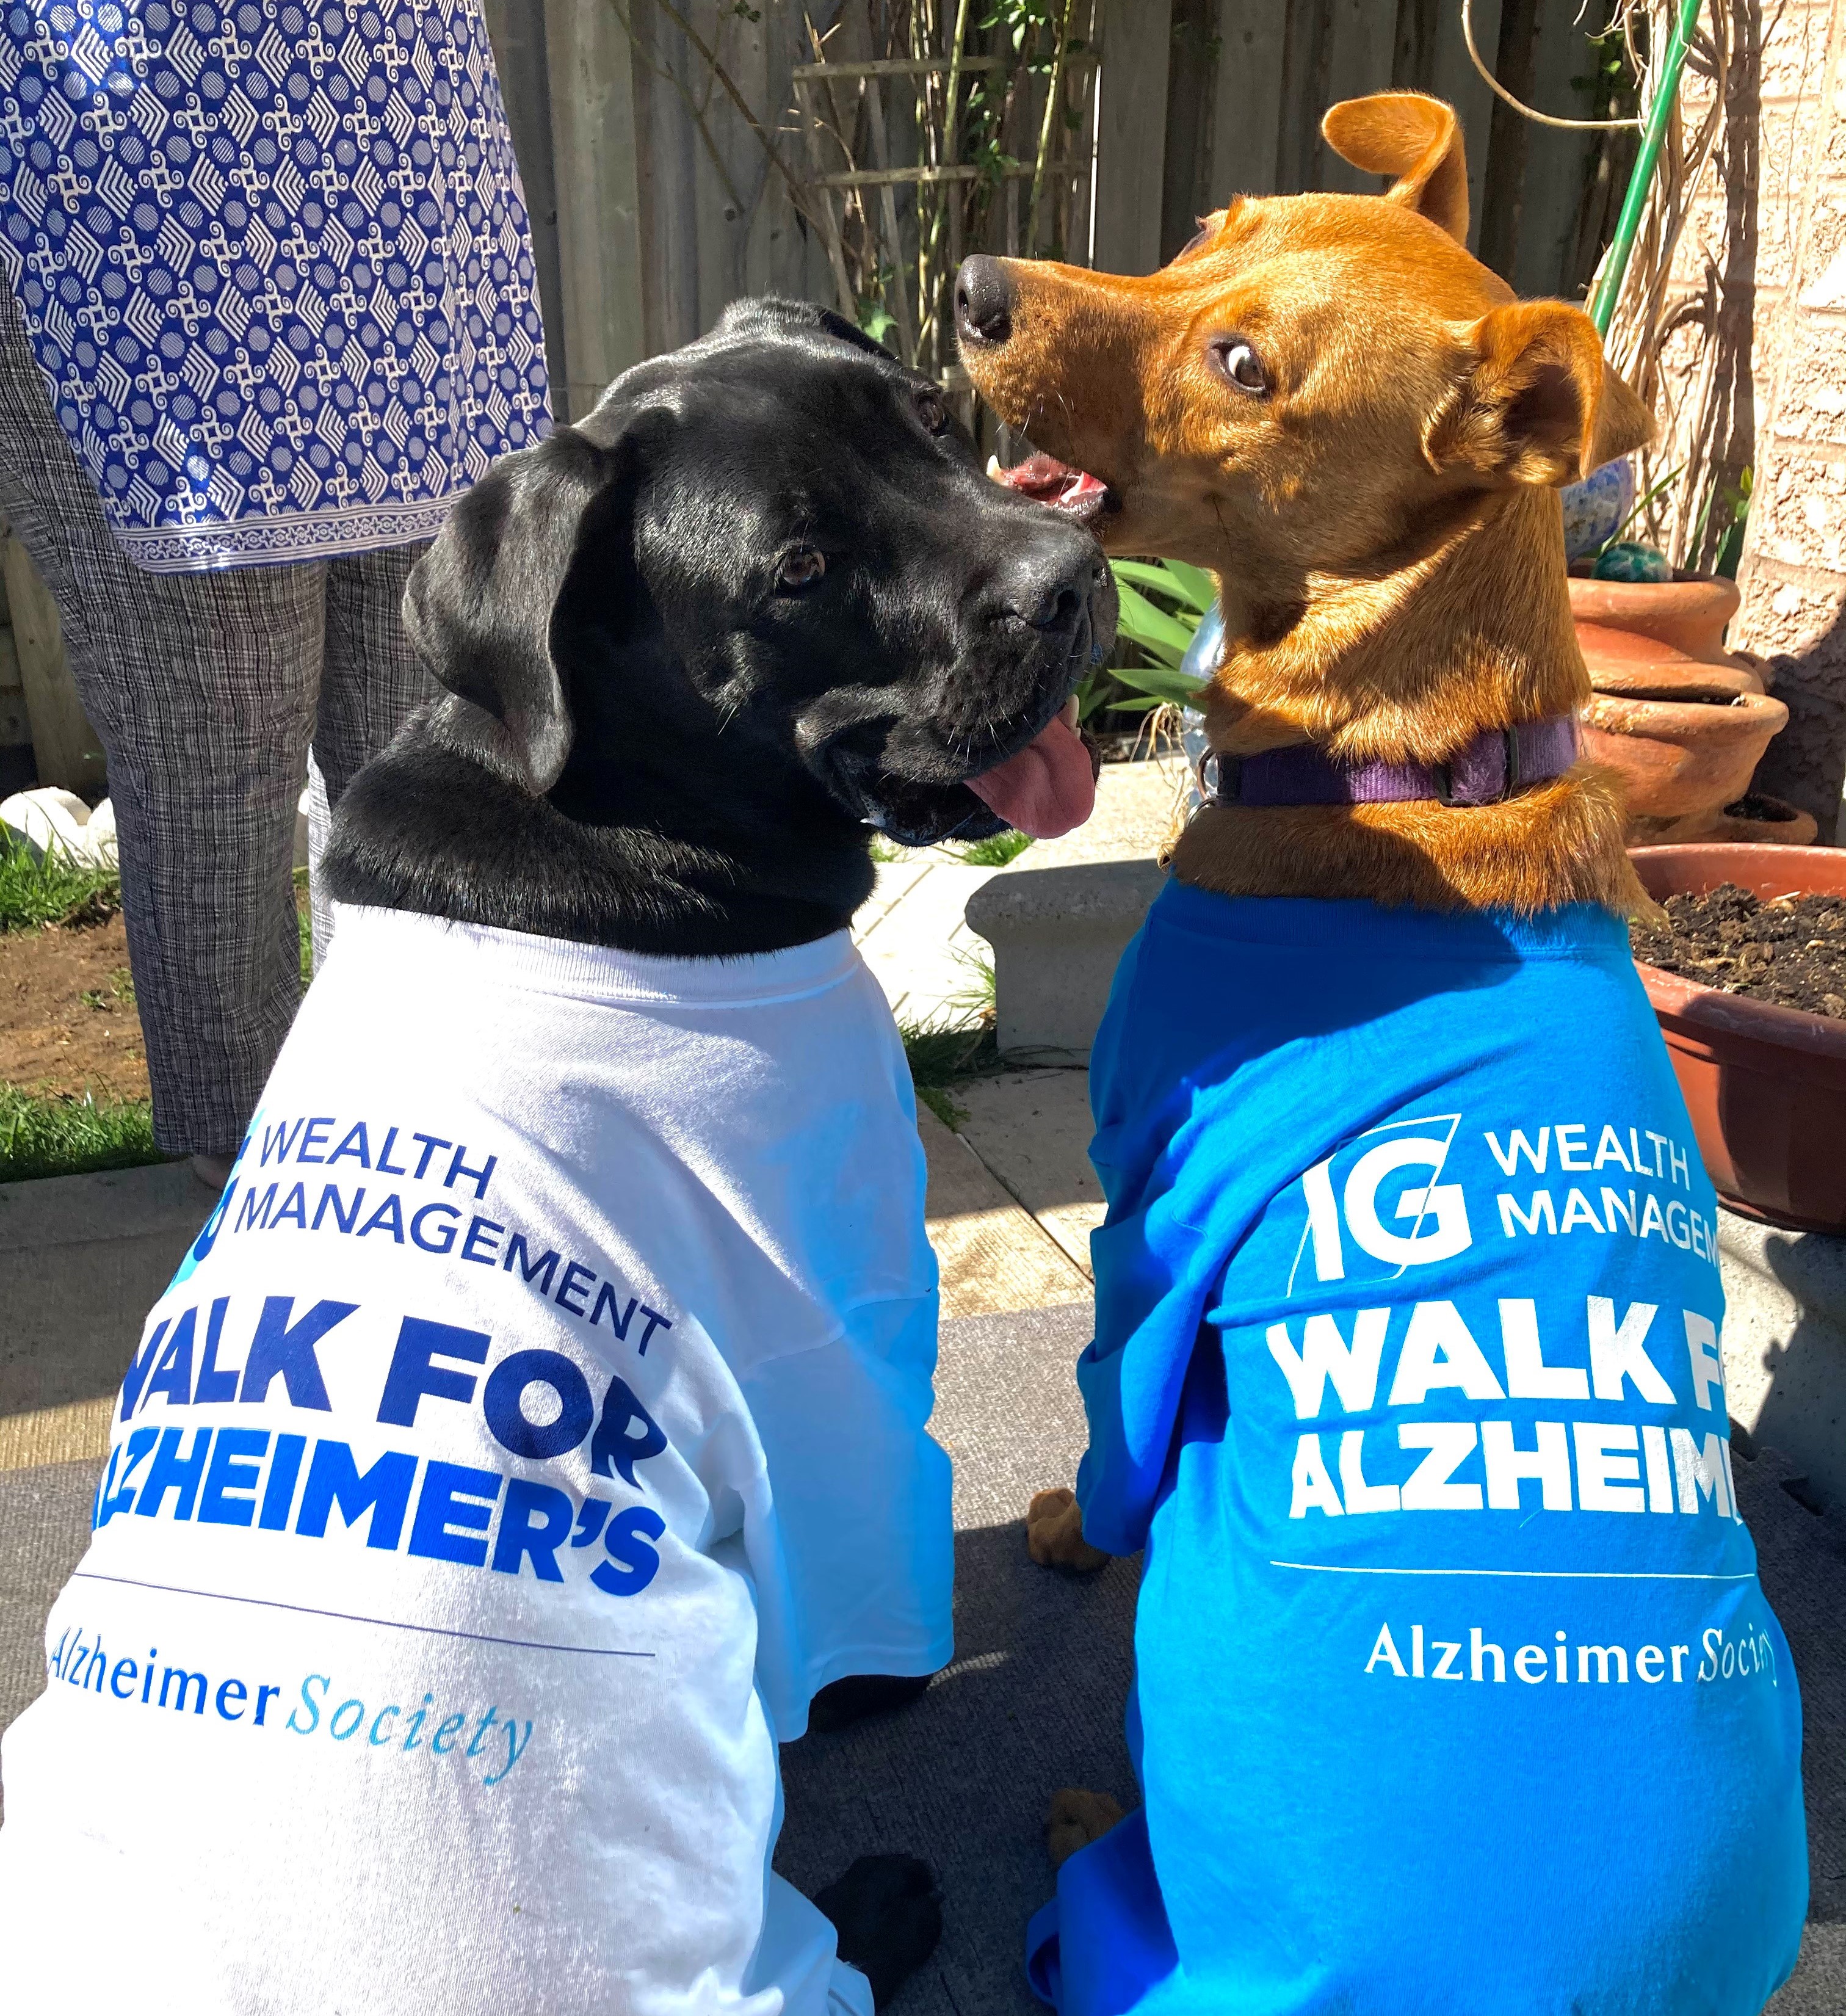 Dog friends wearing IG Wealth Management Walk for Alzheimer's t-shirts